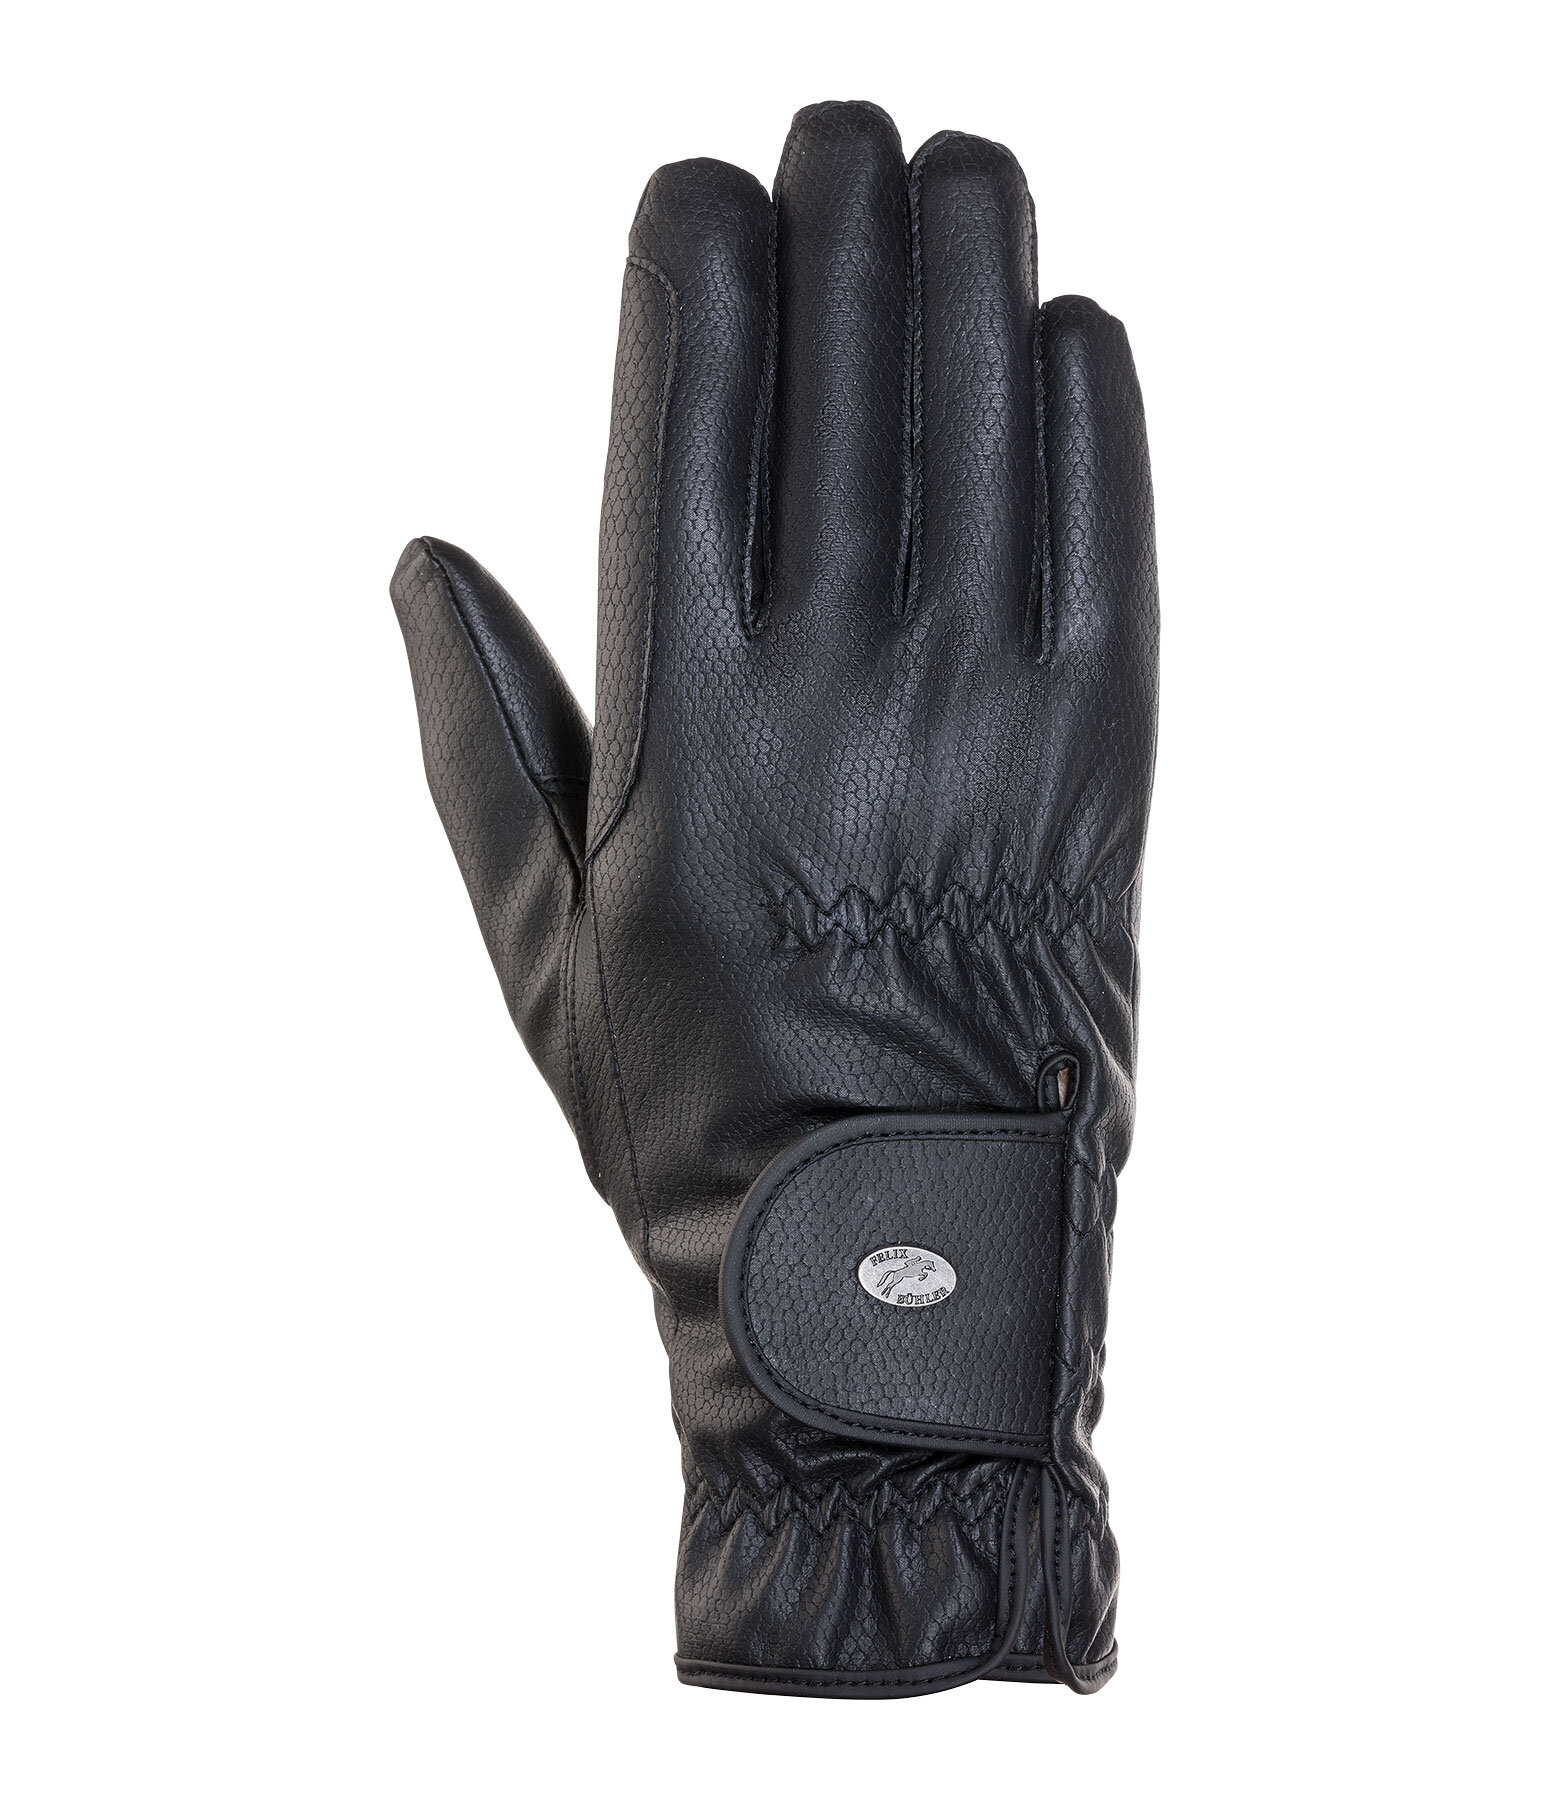 Winter Riding Gloves Rio Grip